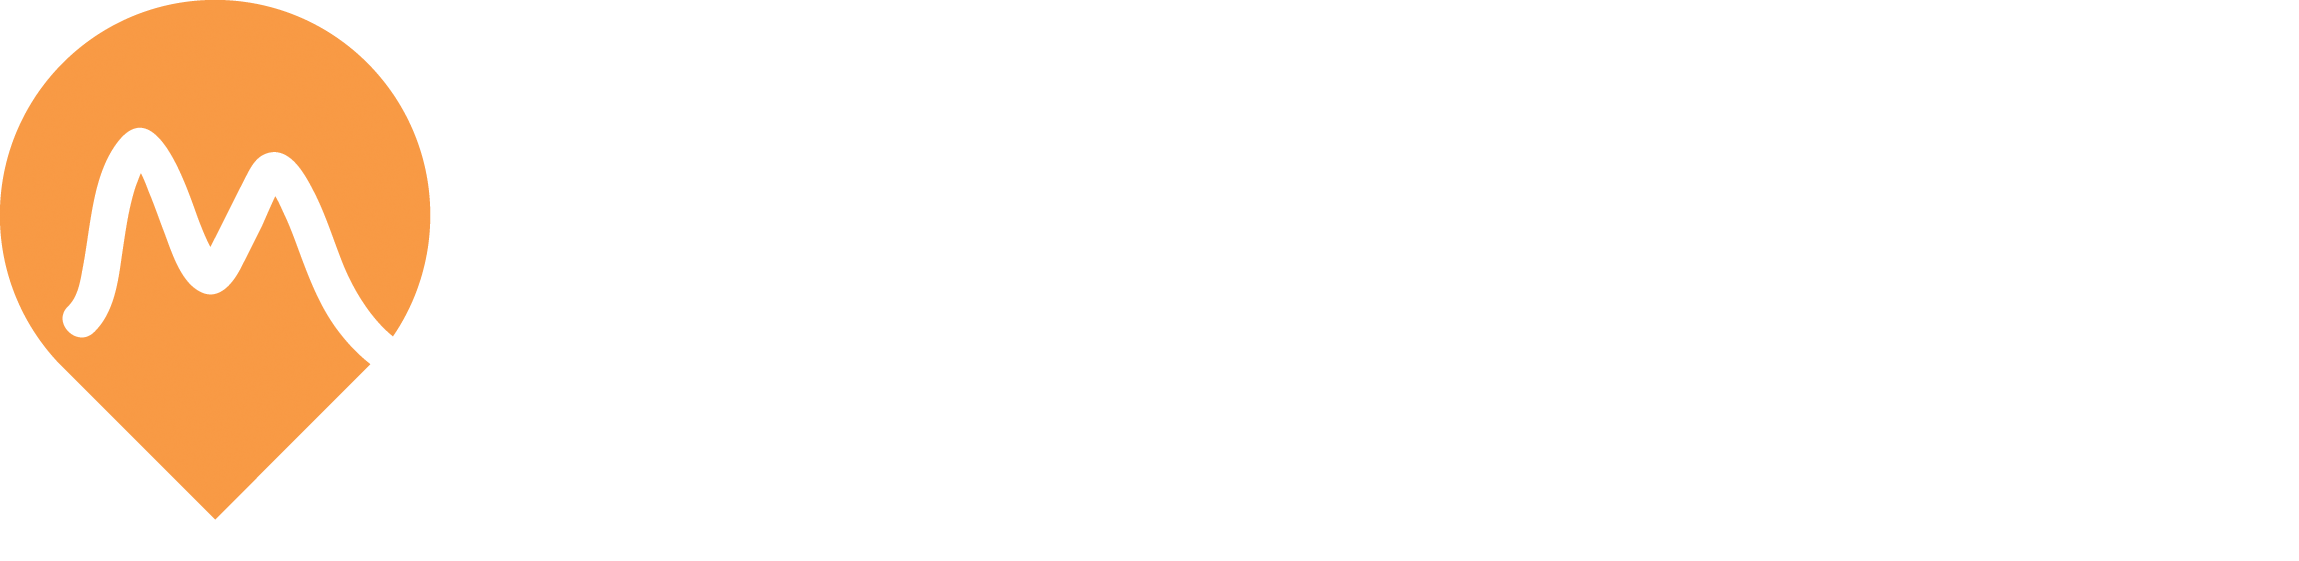 Innovate Moreton Bay Region